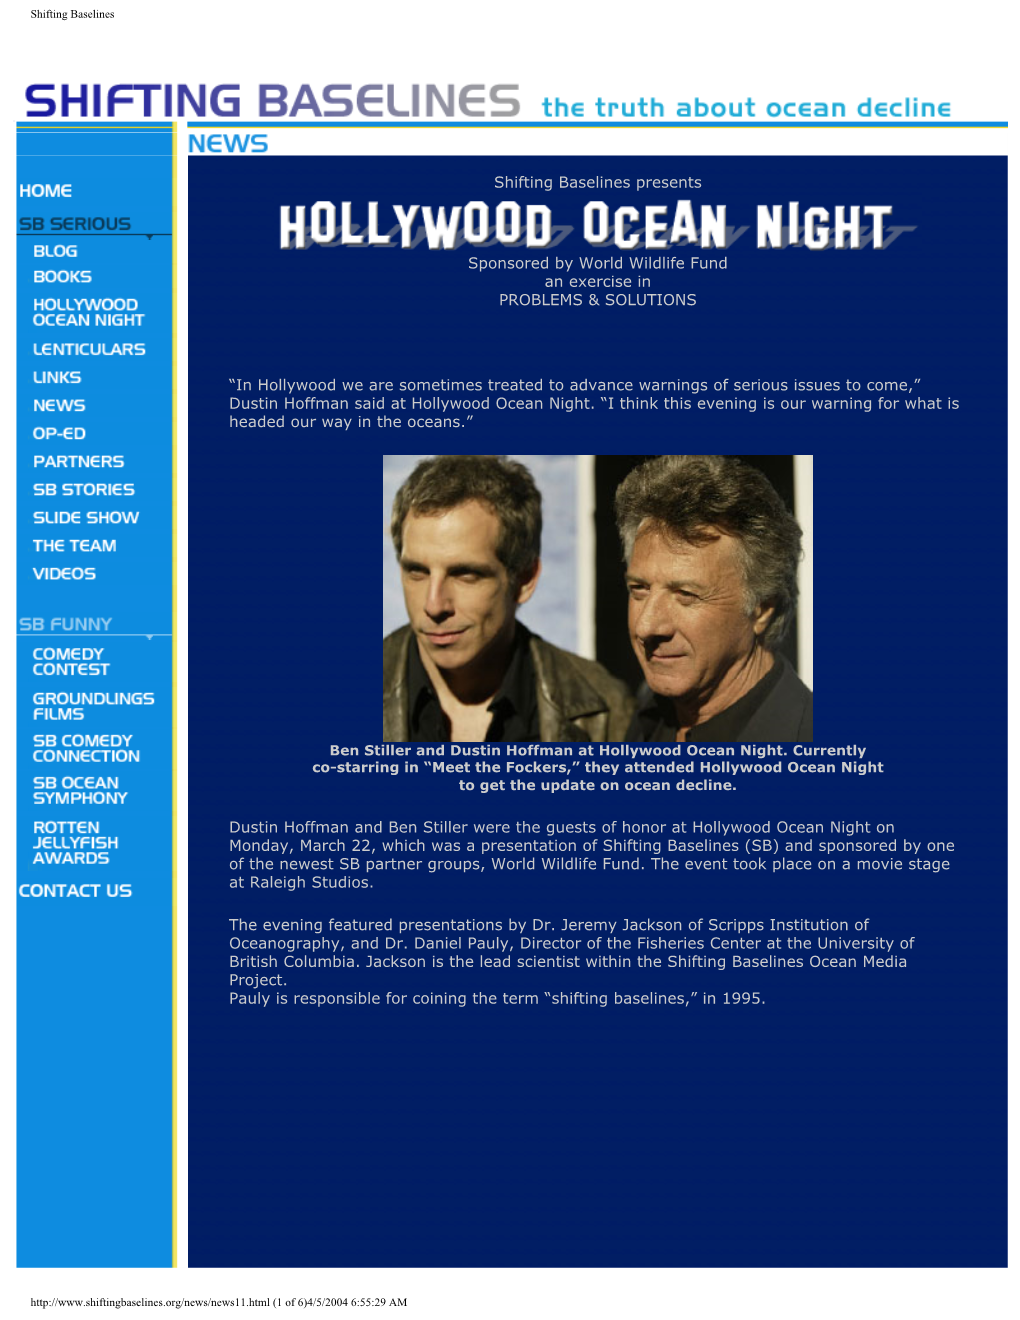 Hollywood Ocean Night